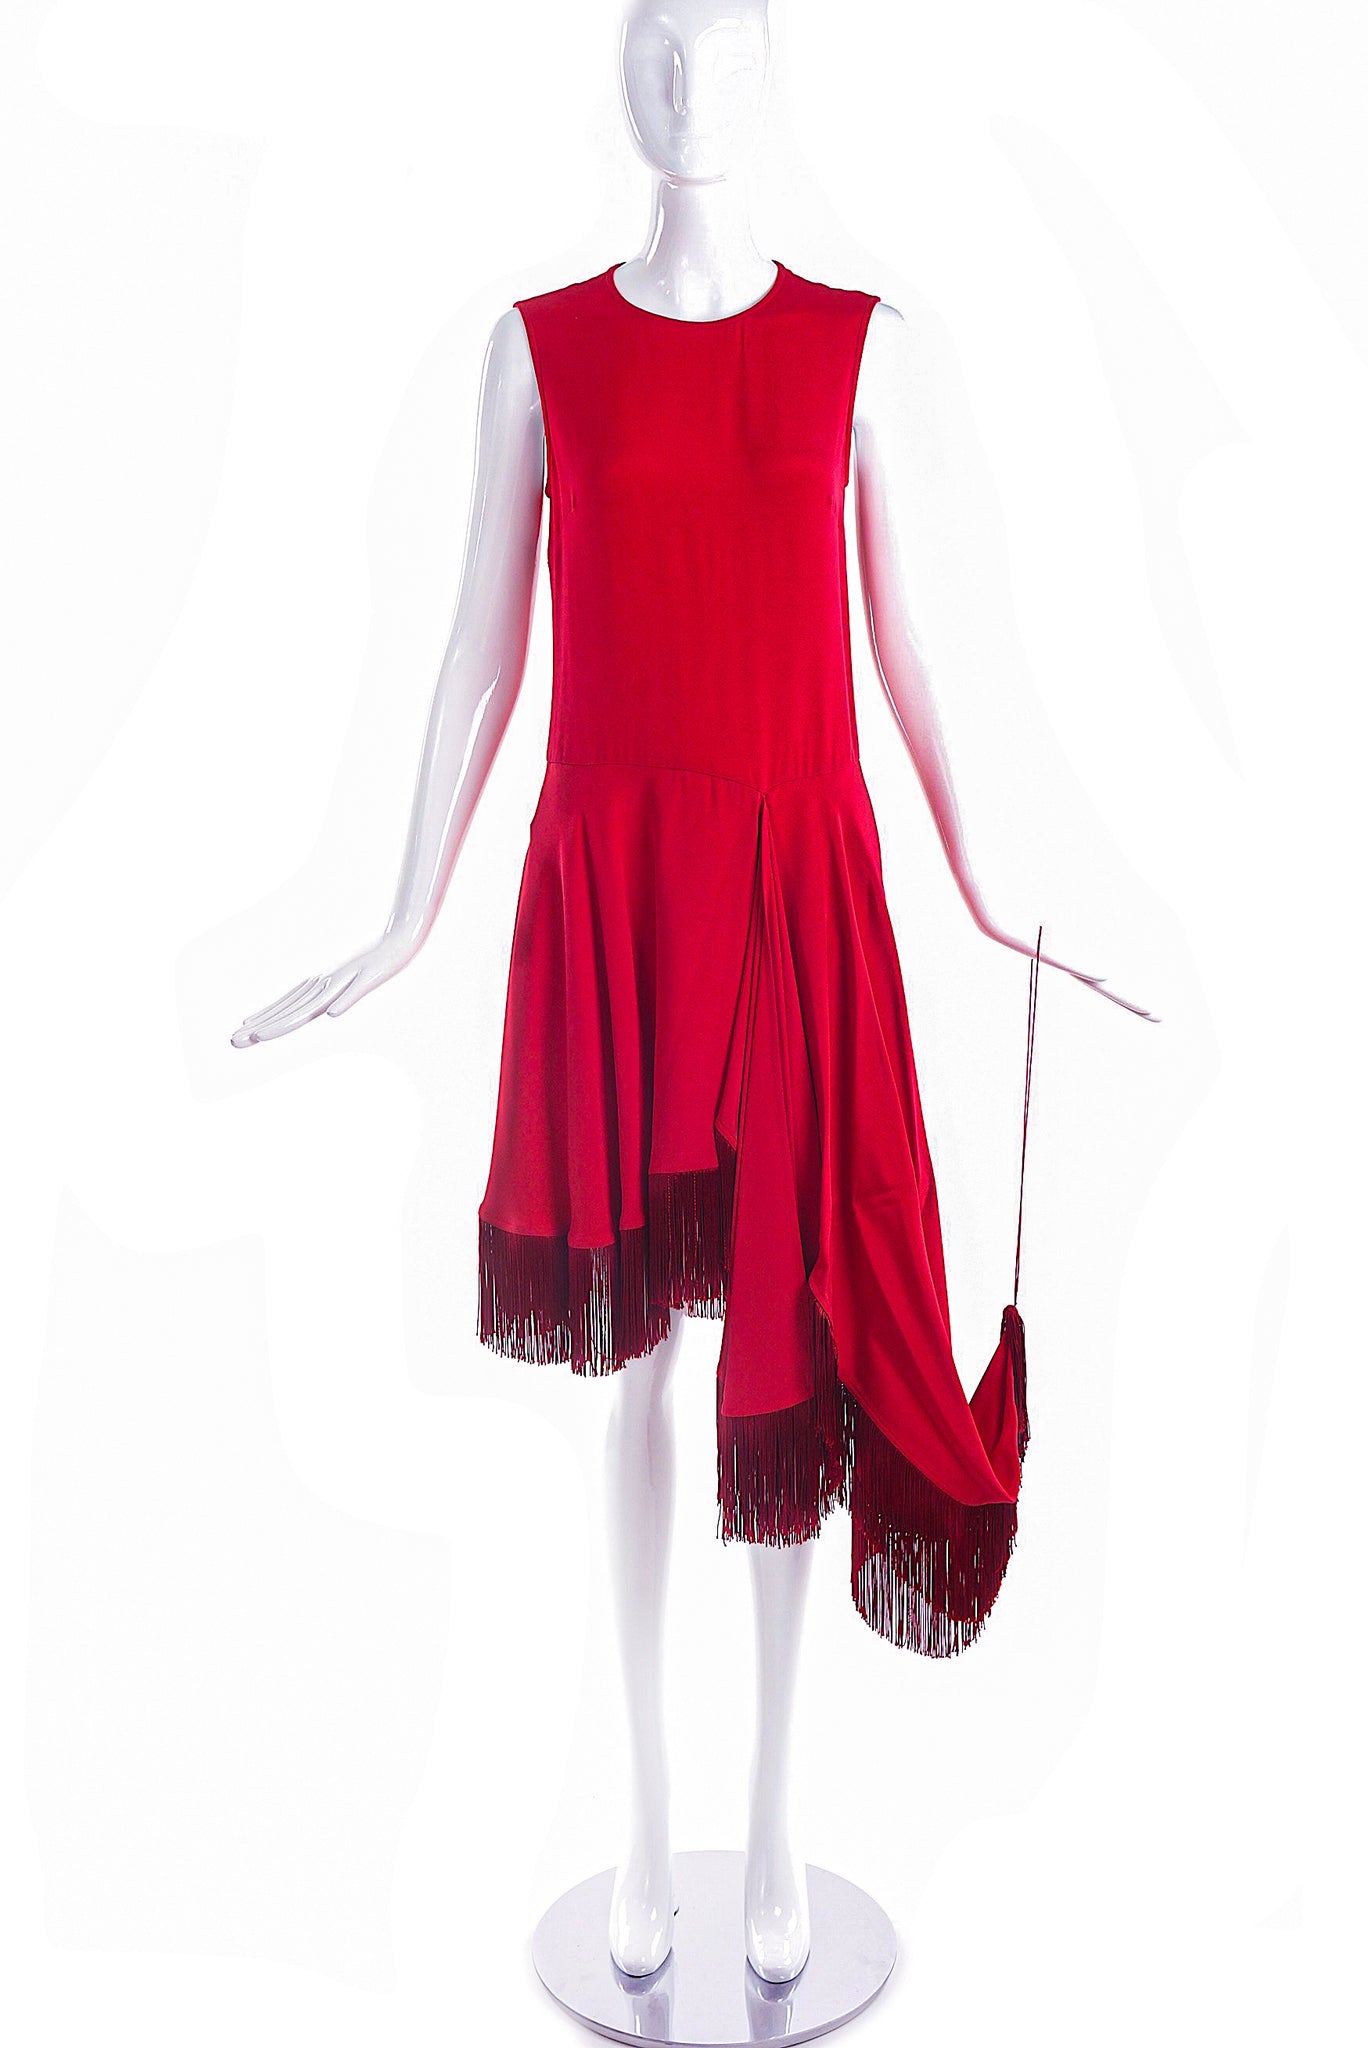 Calvin Klein 205W39NYC by Raf Simons Red Asymmetrical Dress with Fring –  PauméLosAngeles